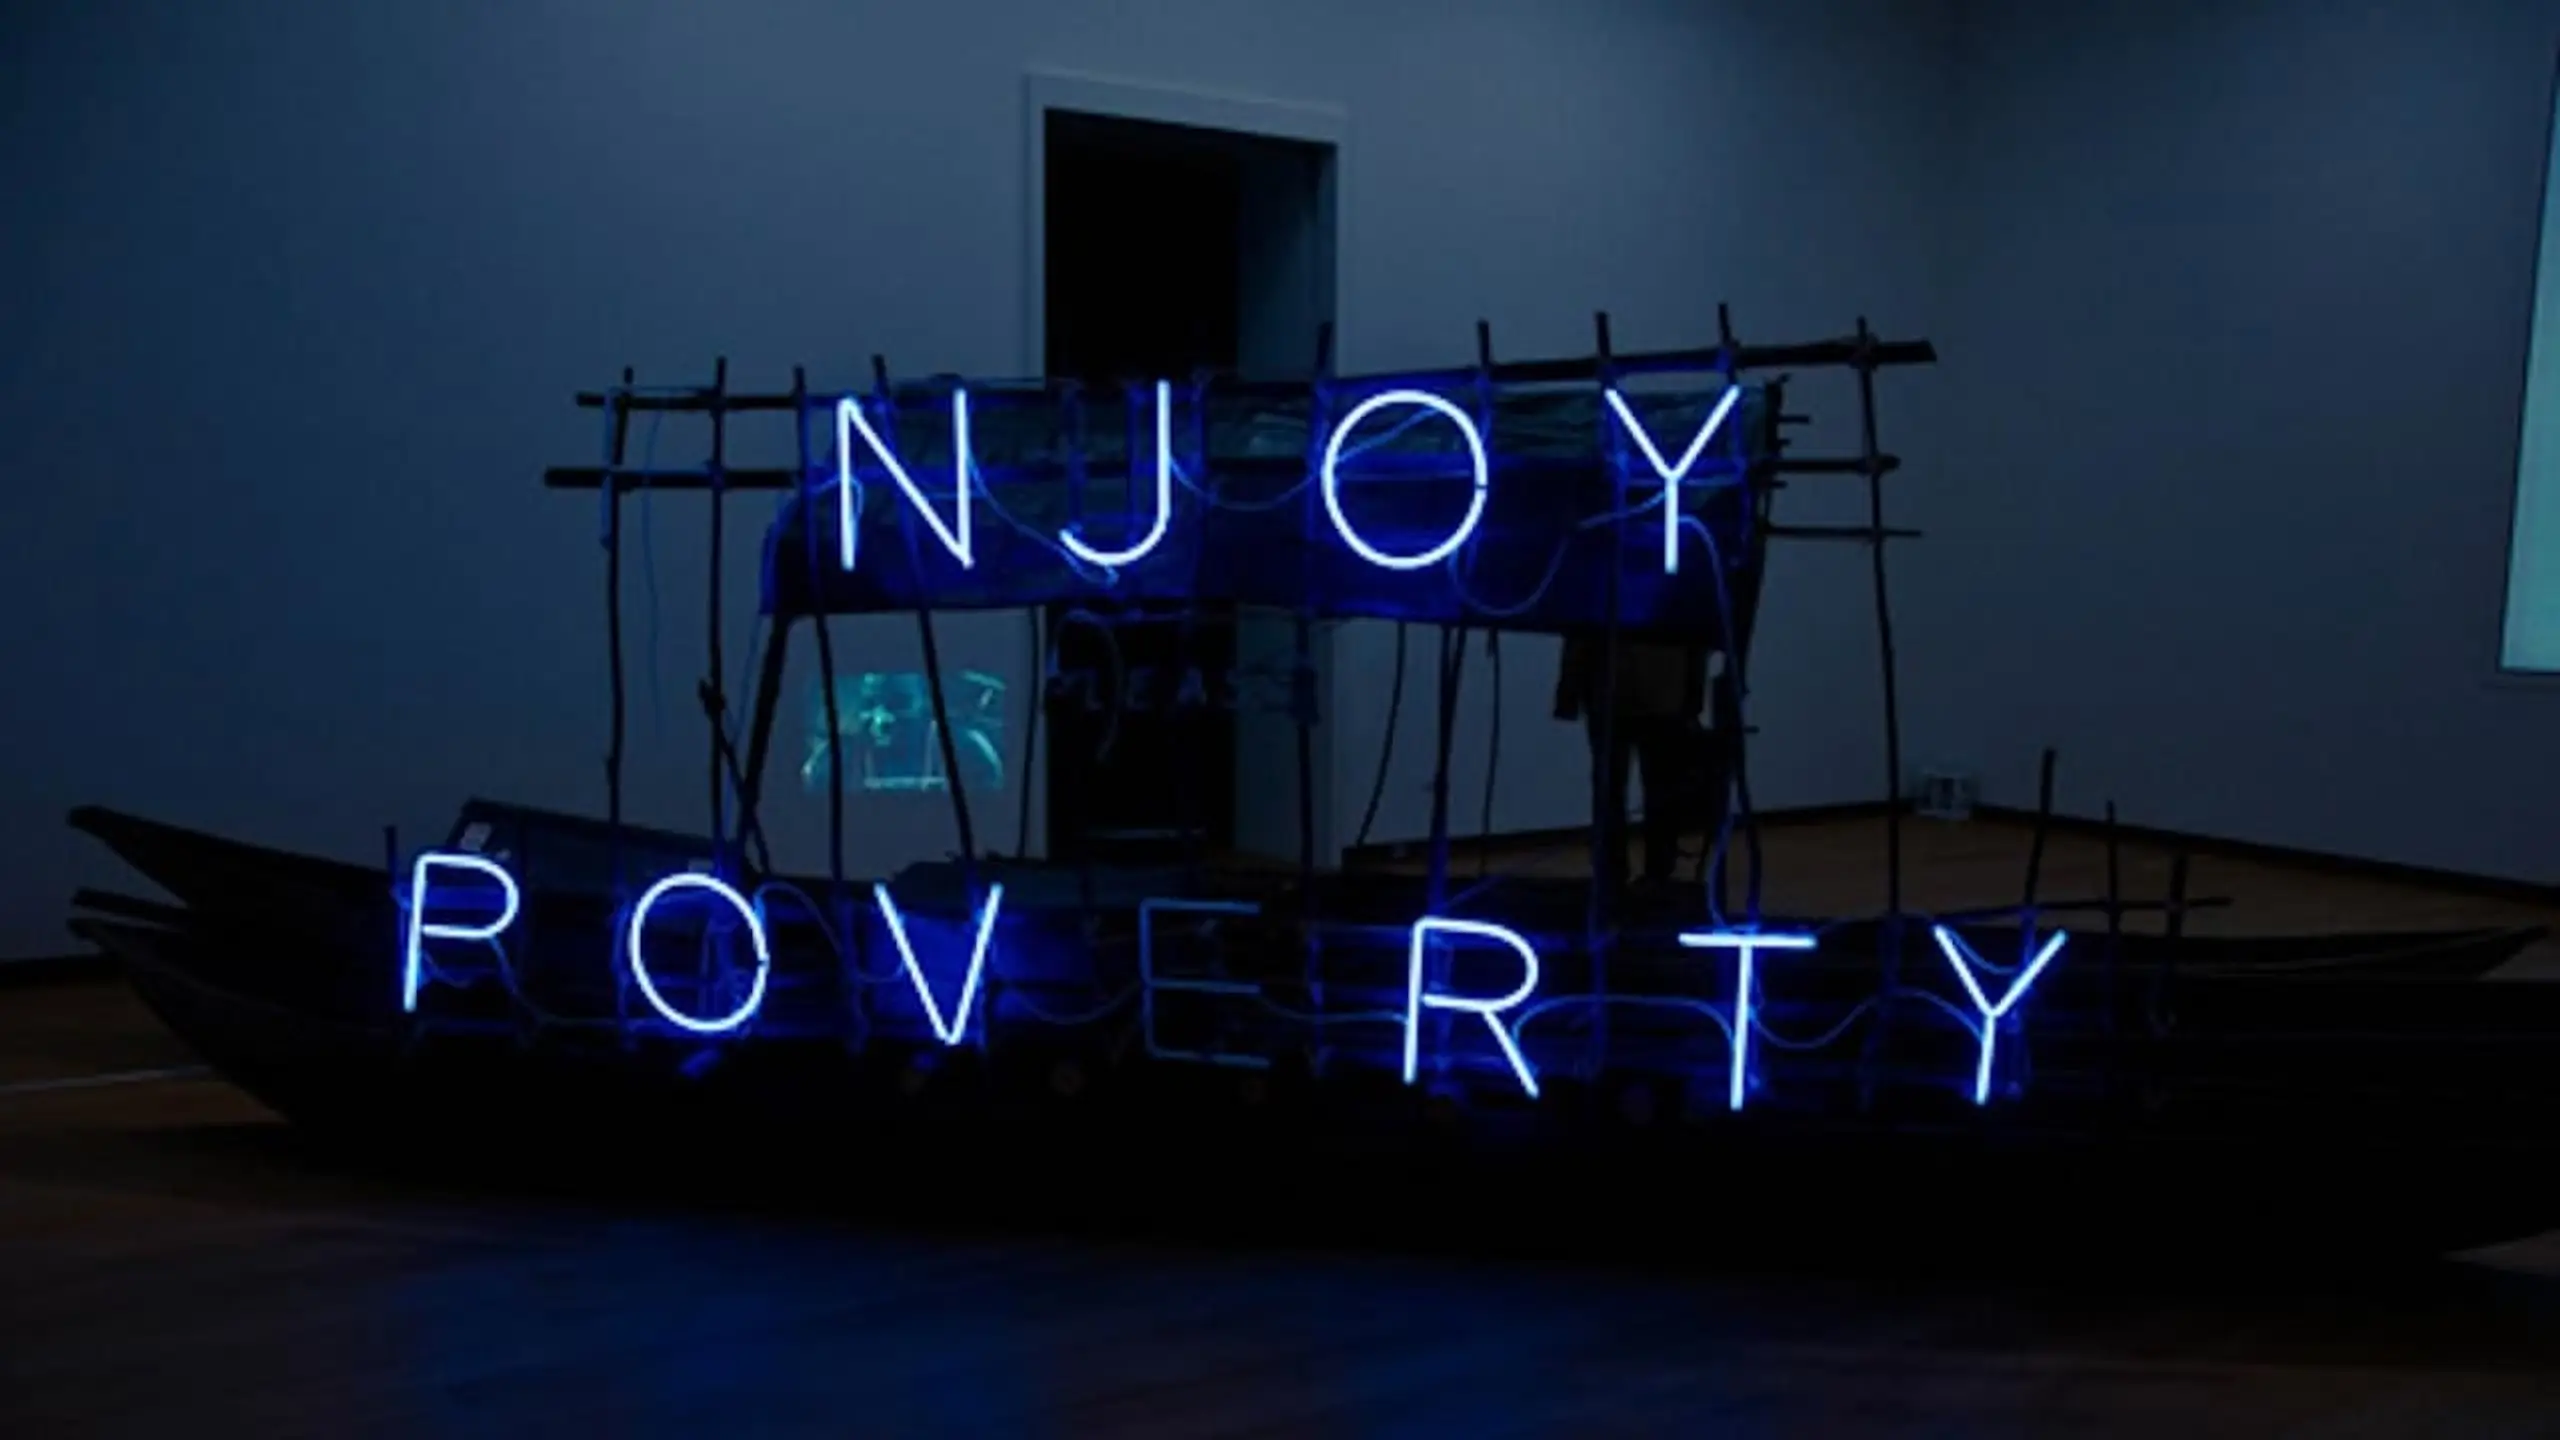 Enjoy Poverty